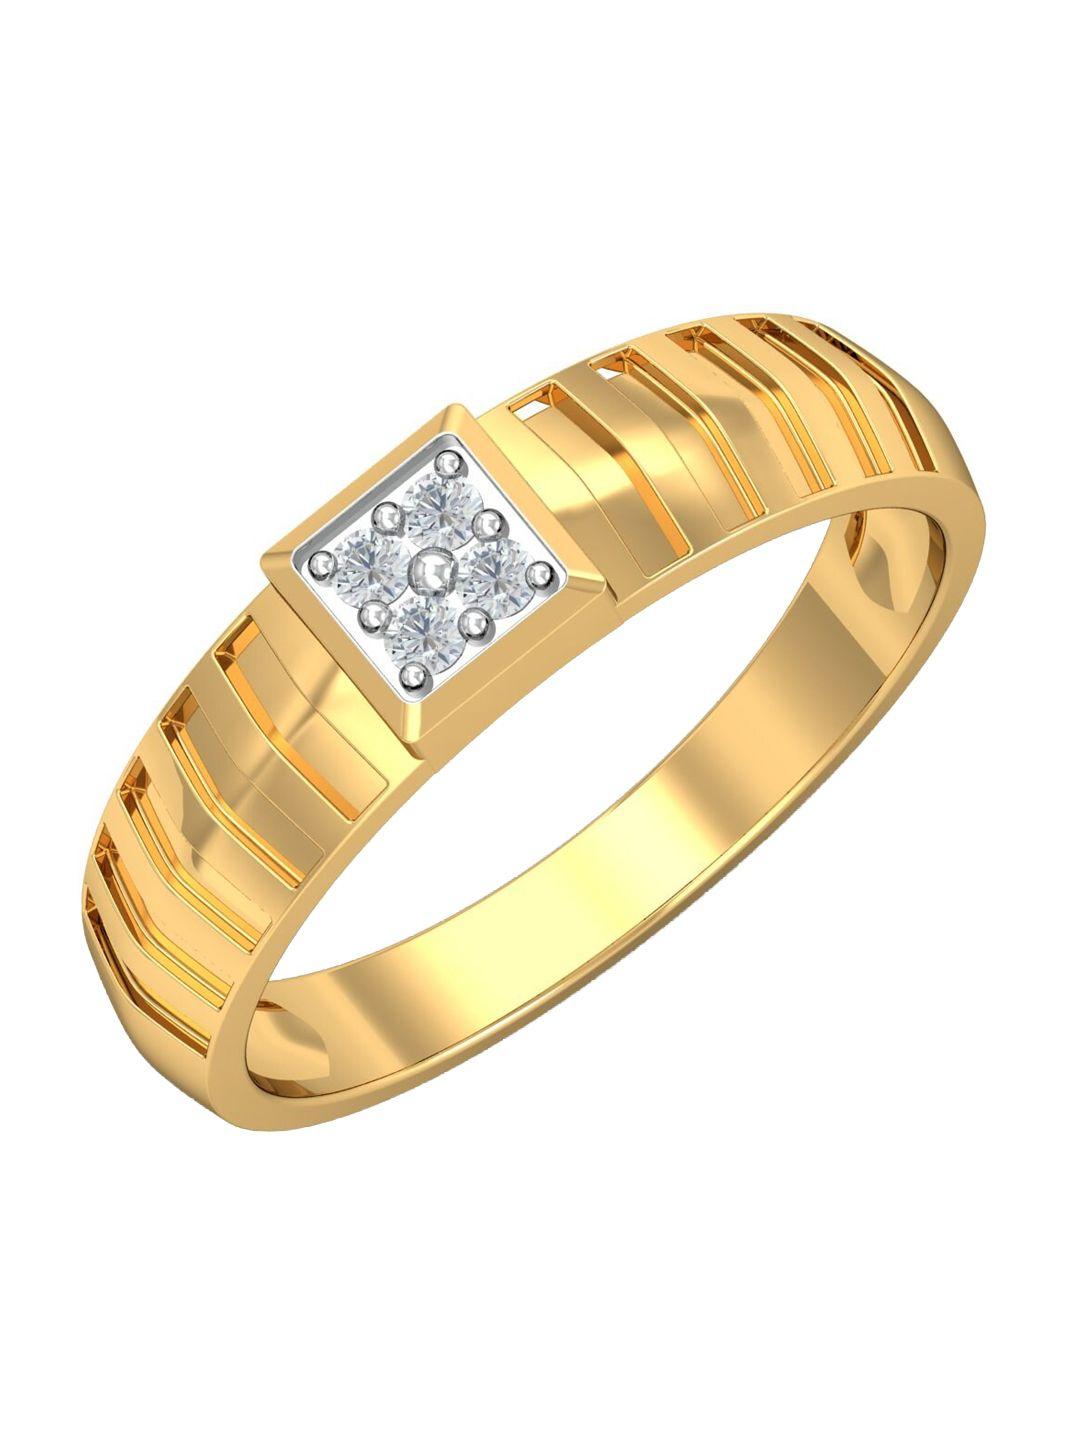 kuberbox-men-18kt-gold-seraph-diamond-studded-ring-3.68-gm